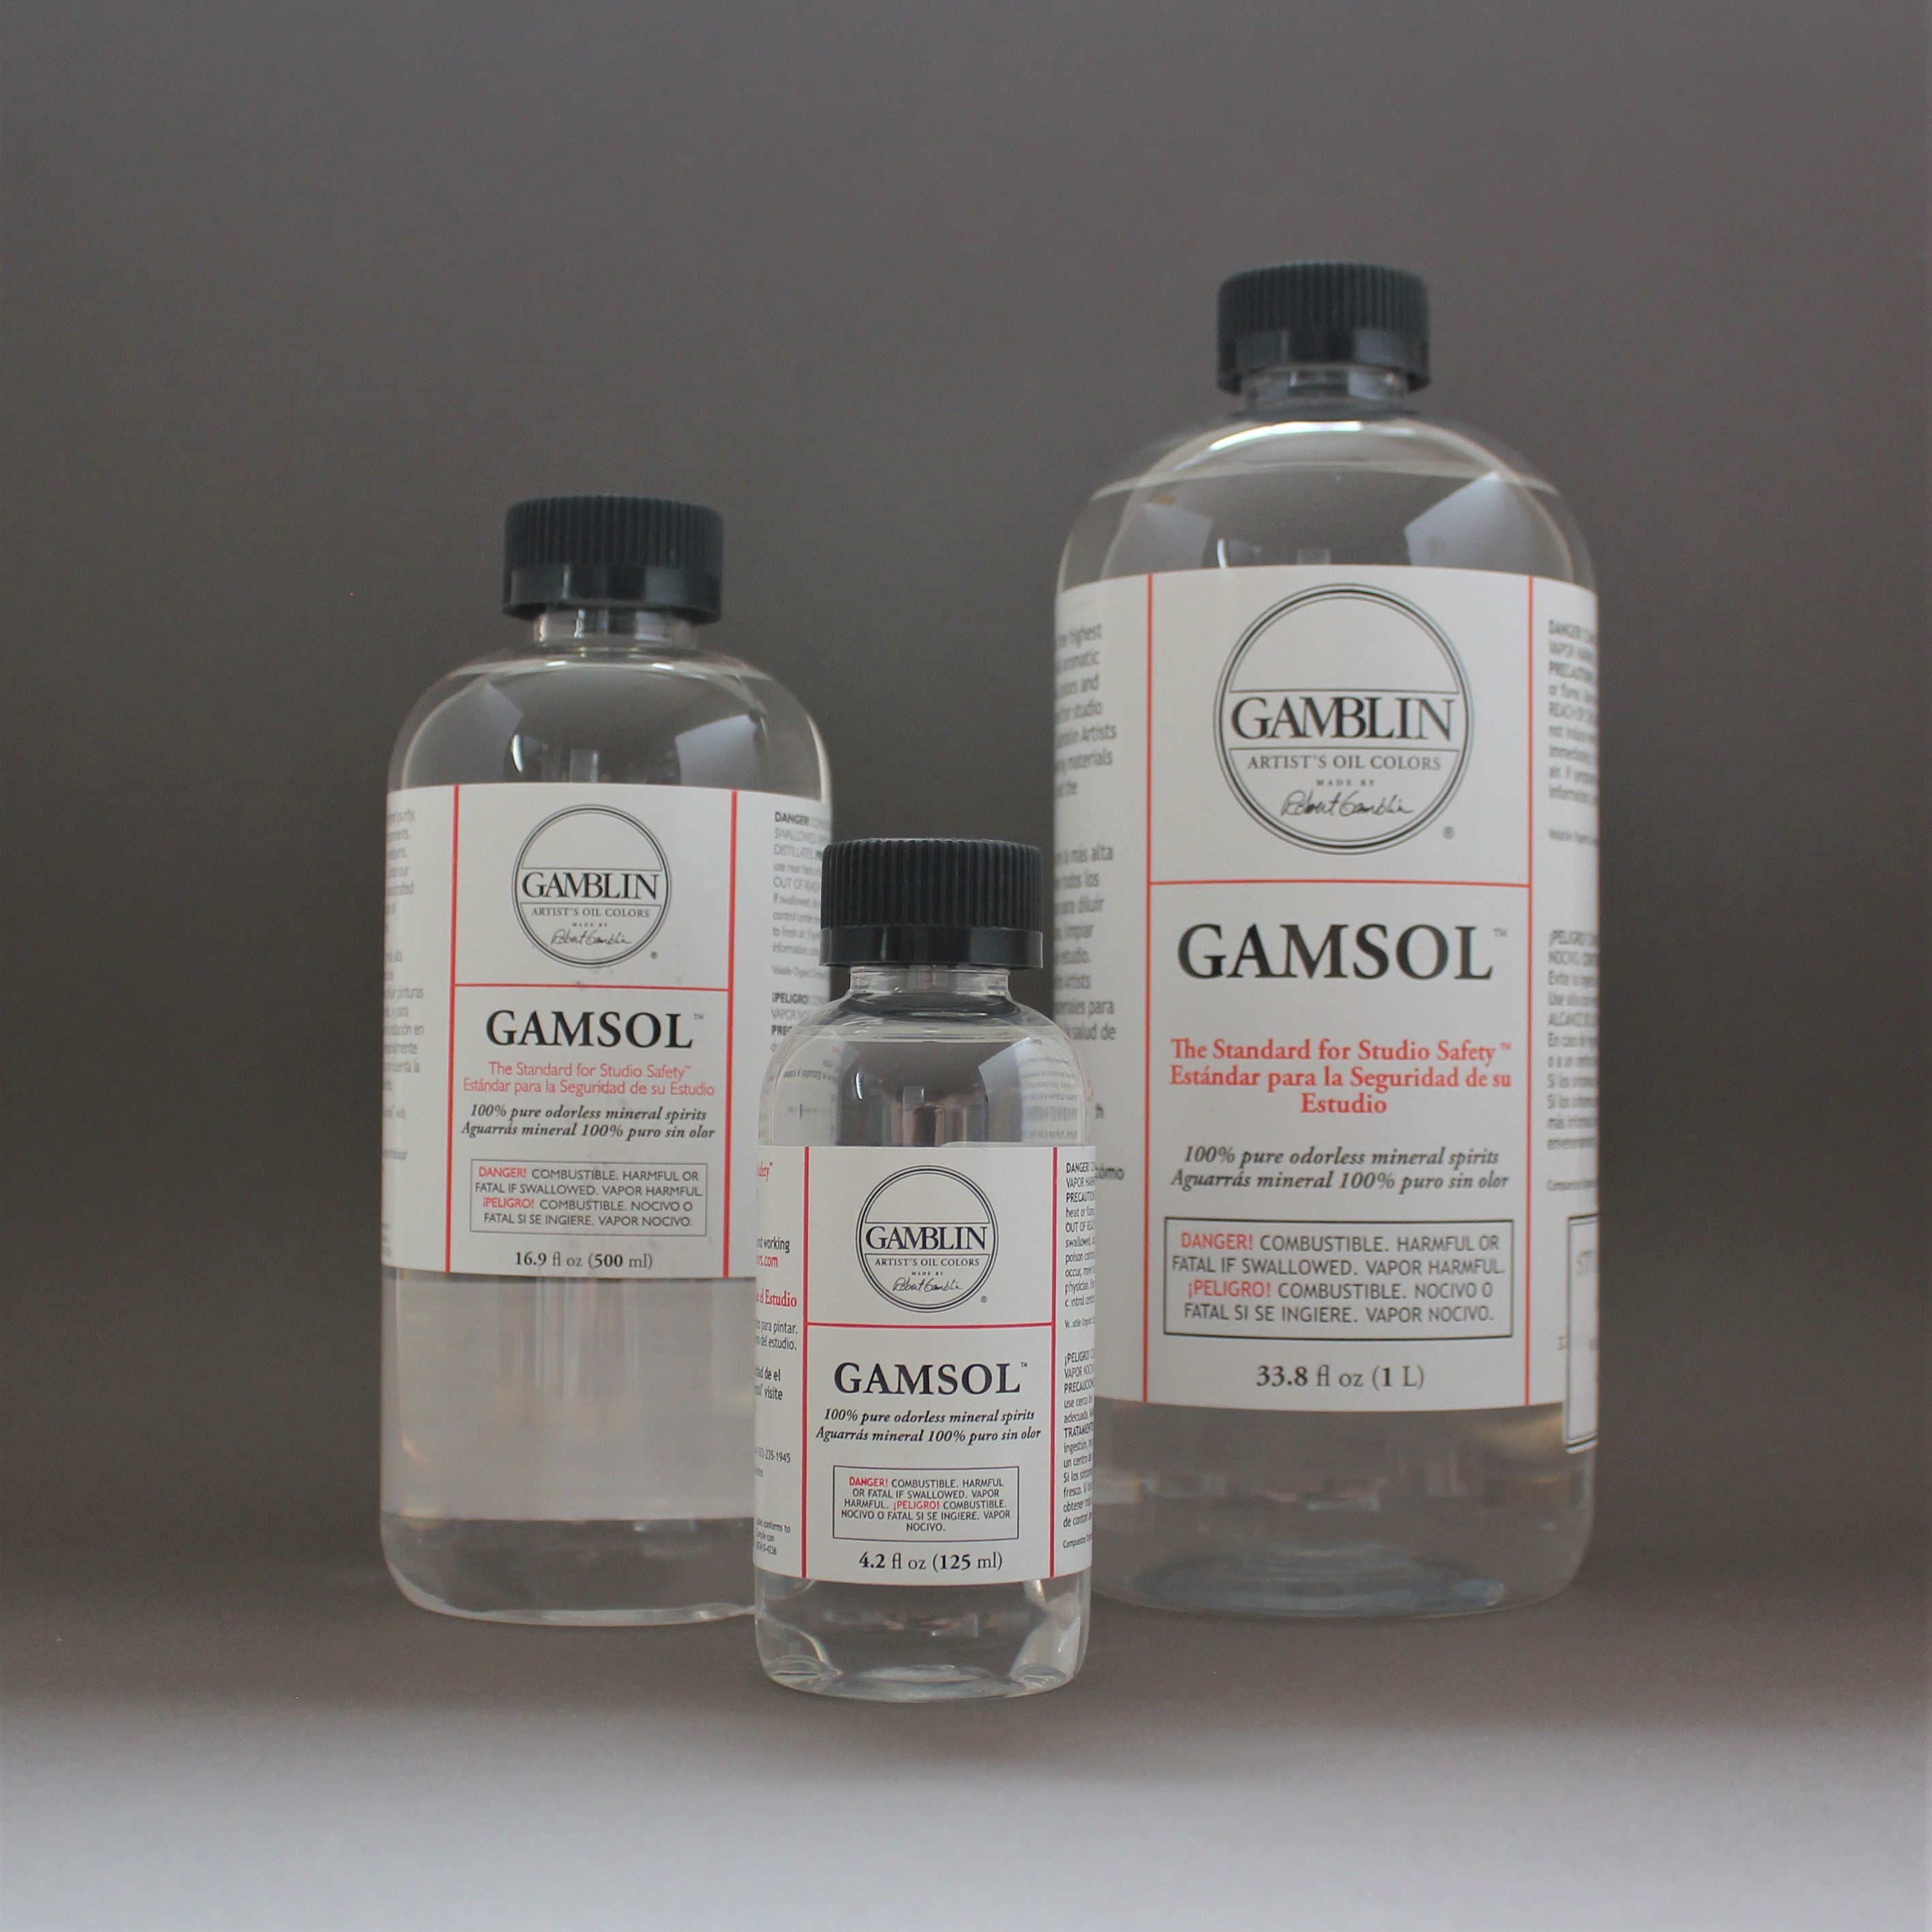 Gamsol Odorless Mineral Spirits - Gamblin Artist Colors